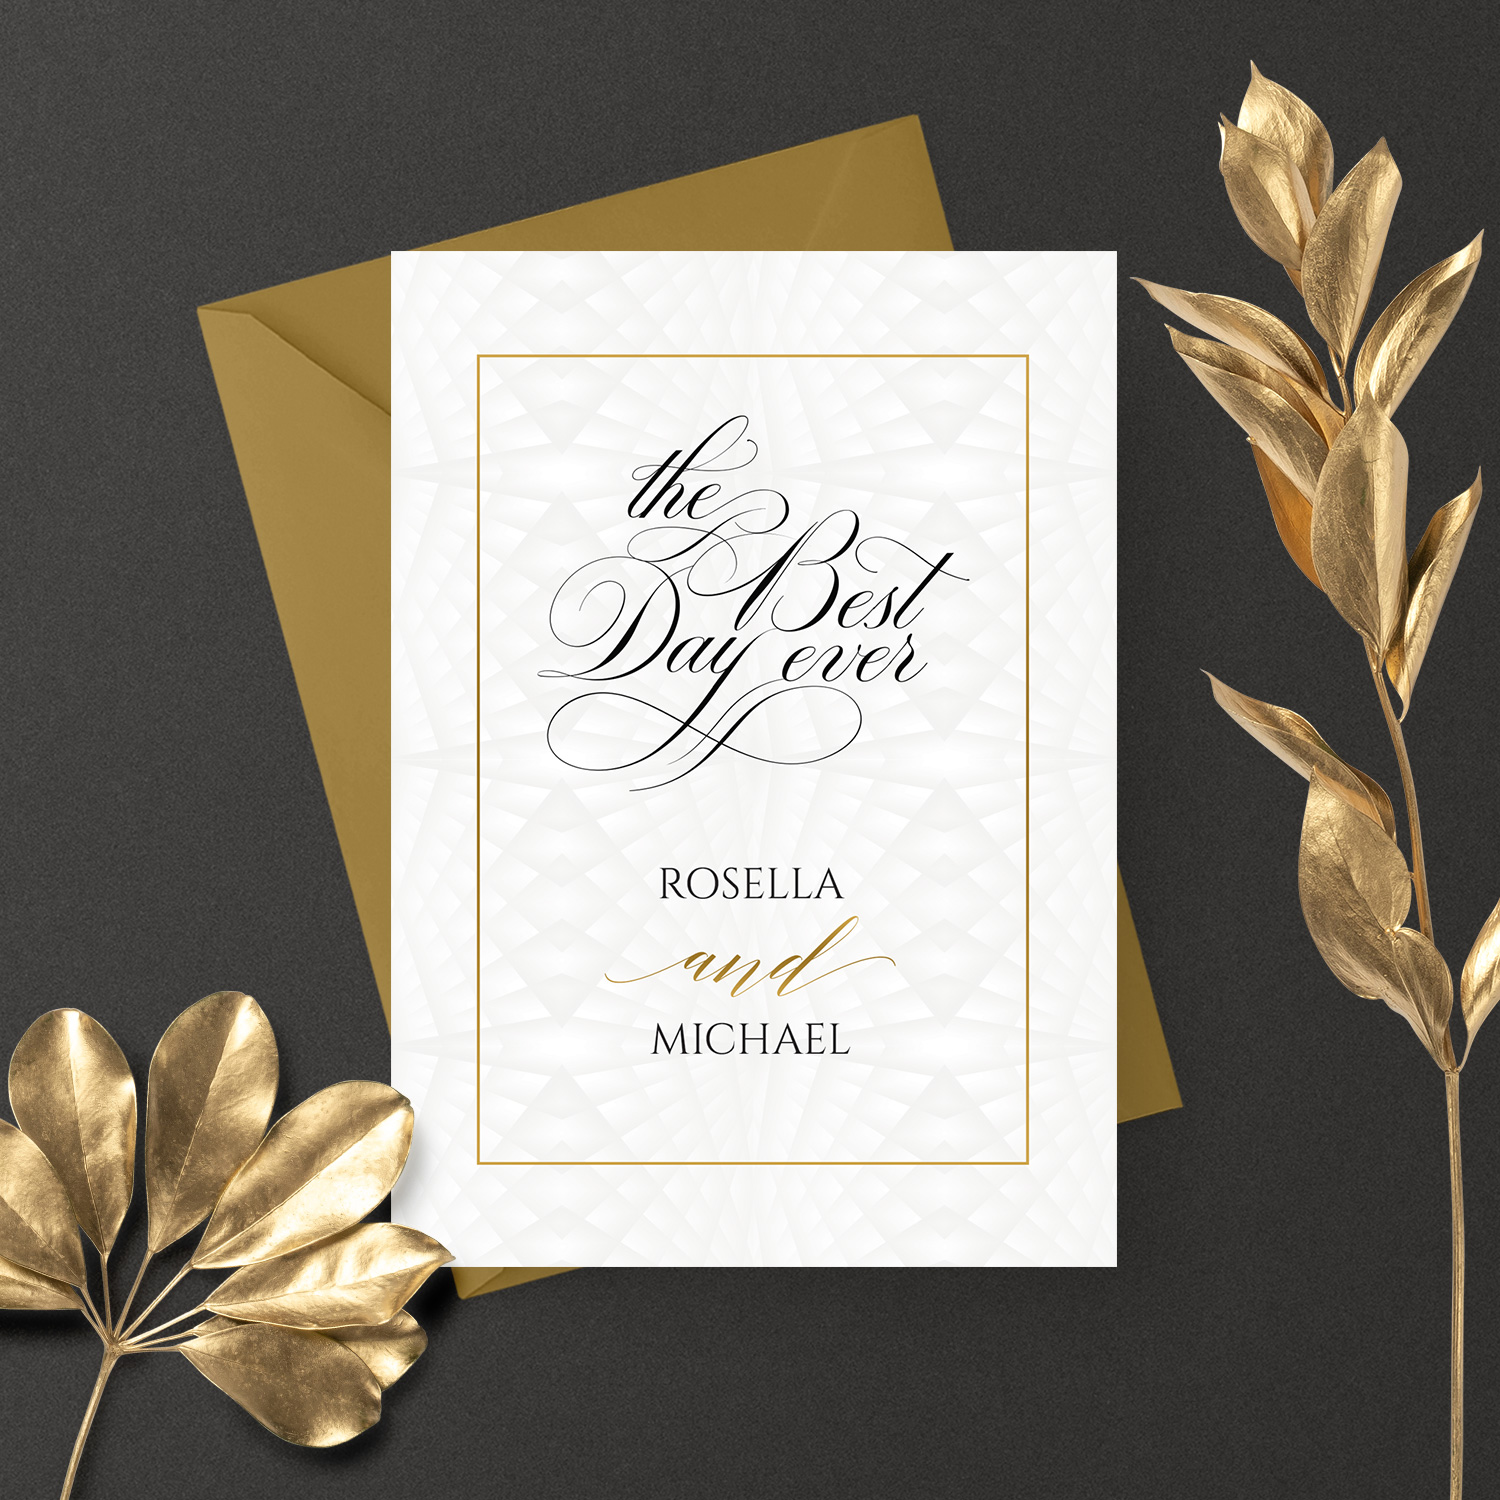 black and white wedding invite - simple and classy wedding invitations